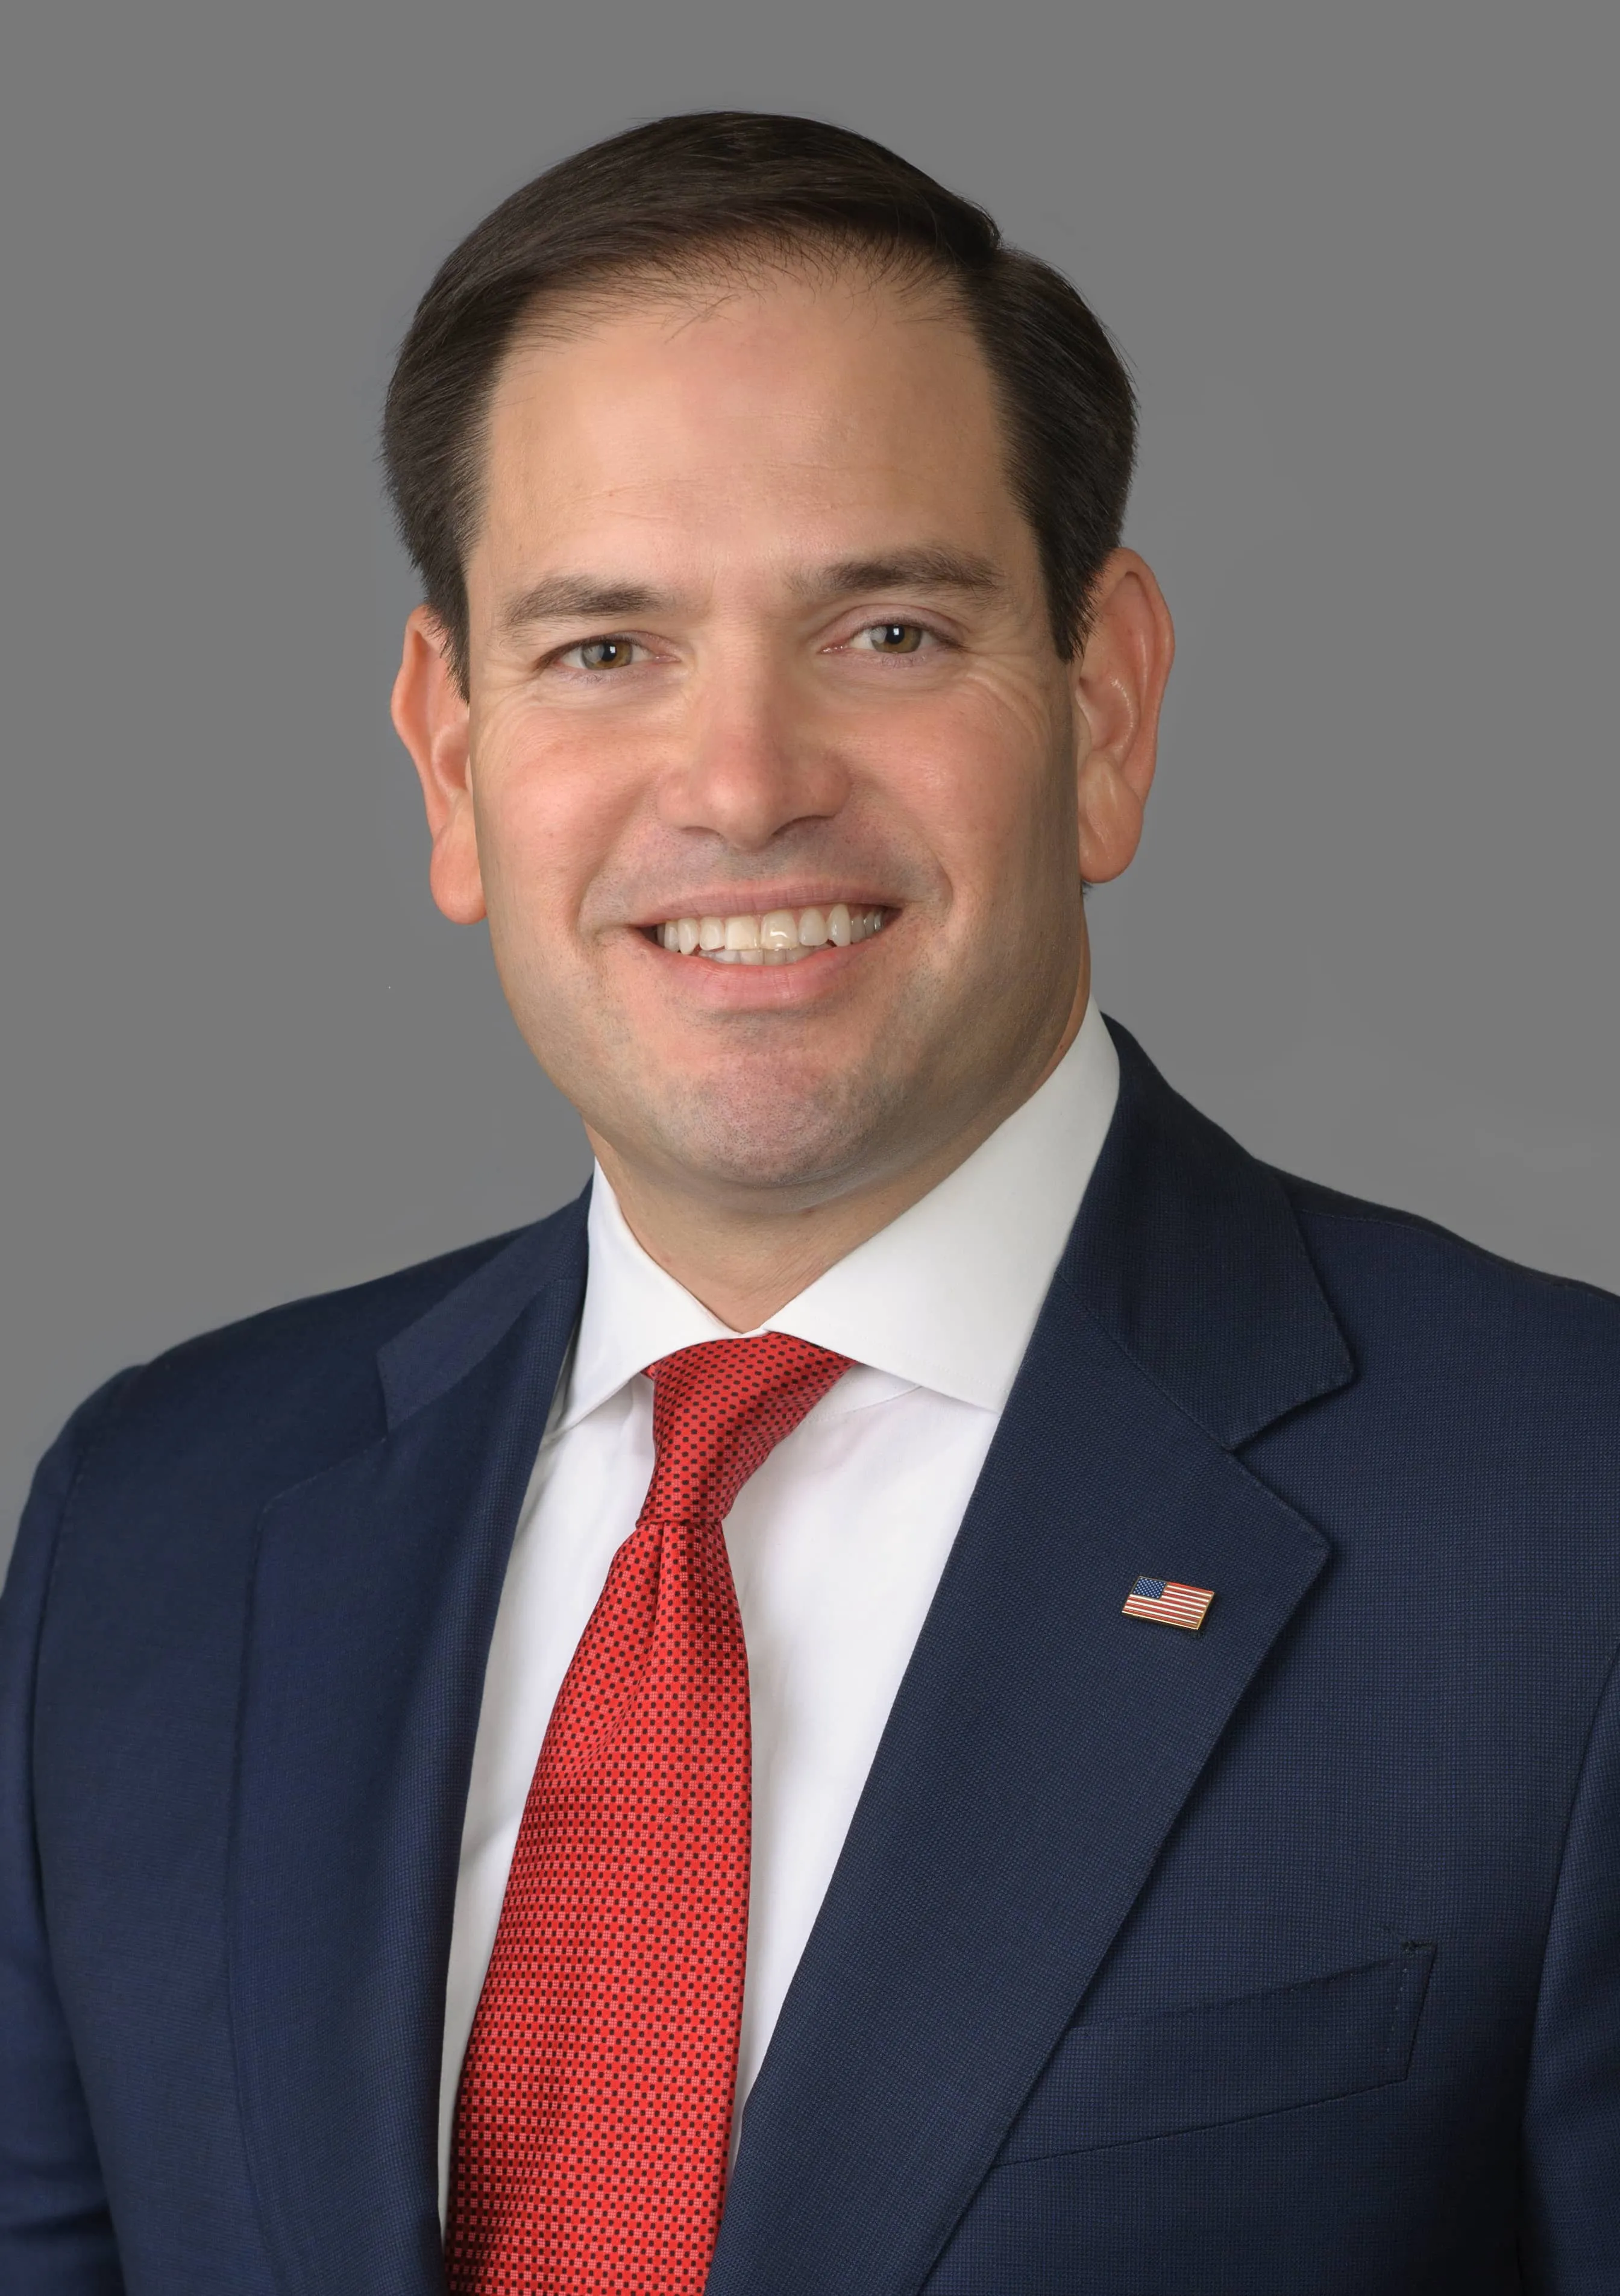 Marco Rubio, R-FL